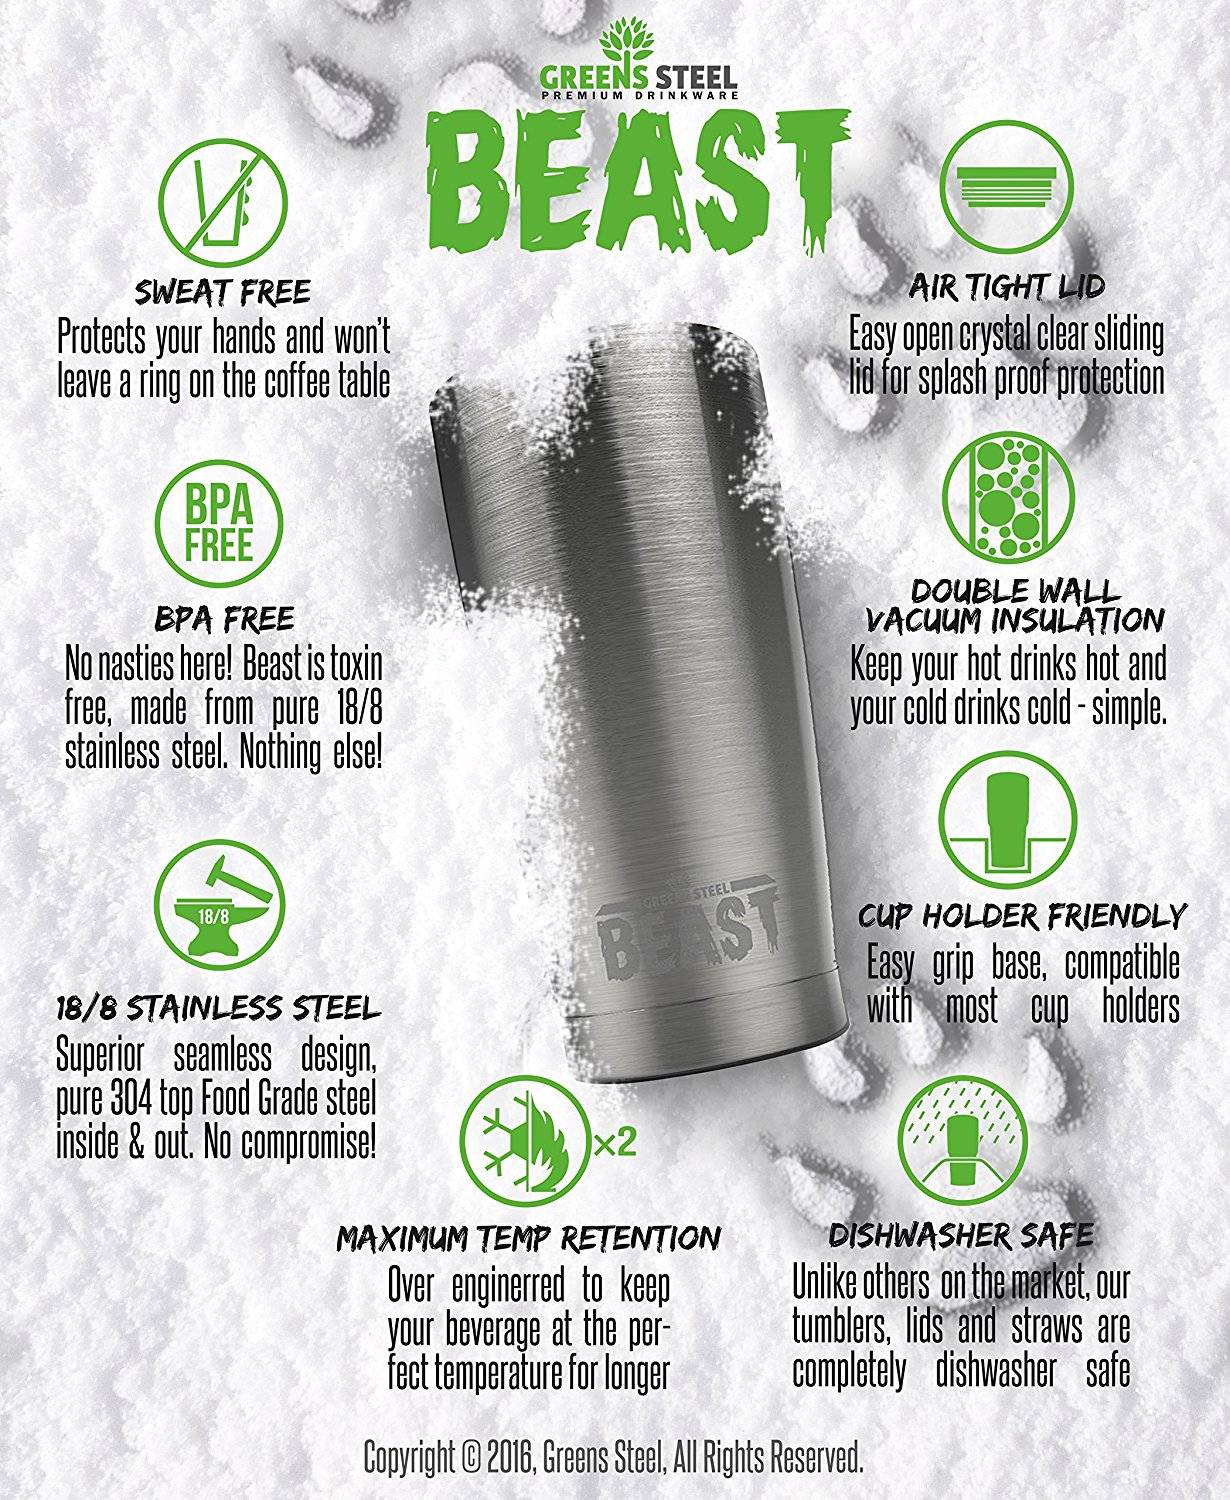  Beast 20 oz Tumbler Stainless Steel Vacuum Insulated